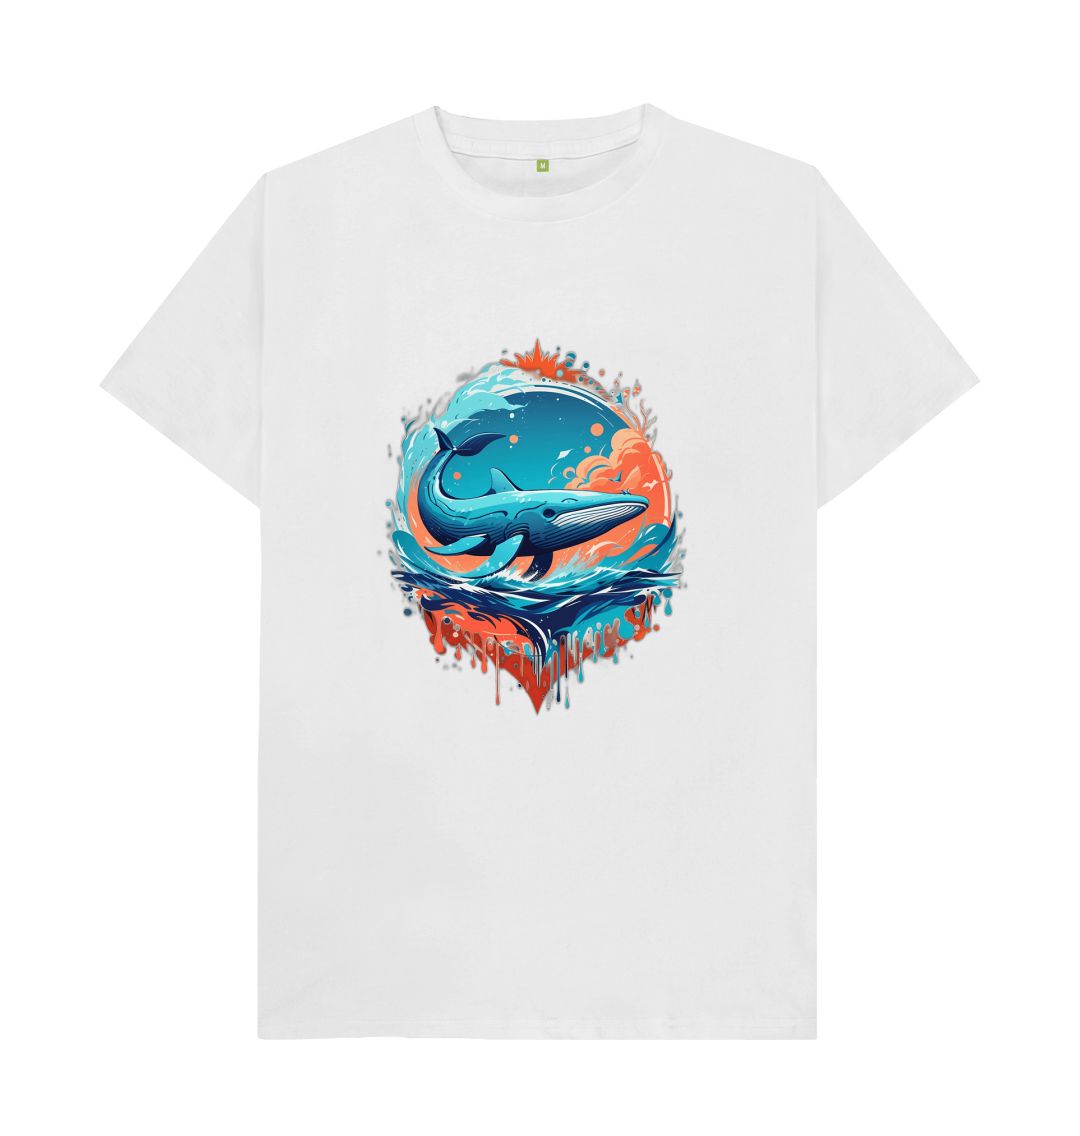 Men's blue whale design organic cotton t-shirt - Premium Eco Chic Printed T-shirt from Eco Threadz - Just £20! Shop now at Eco Threadz